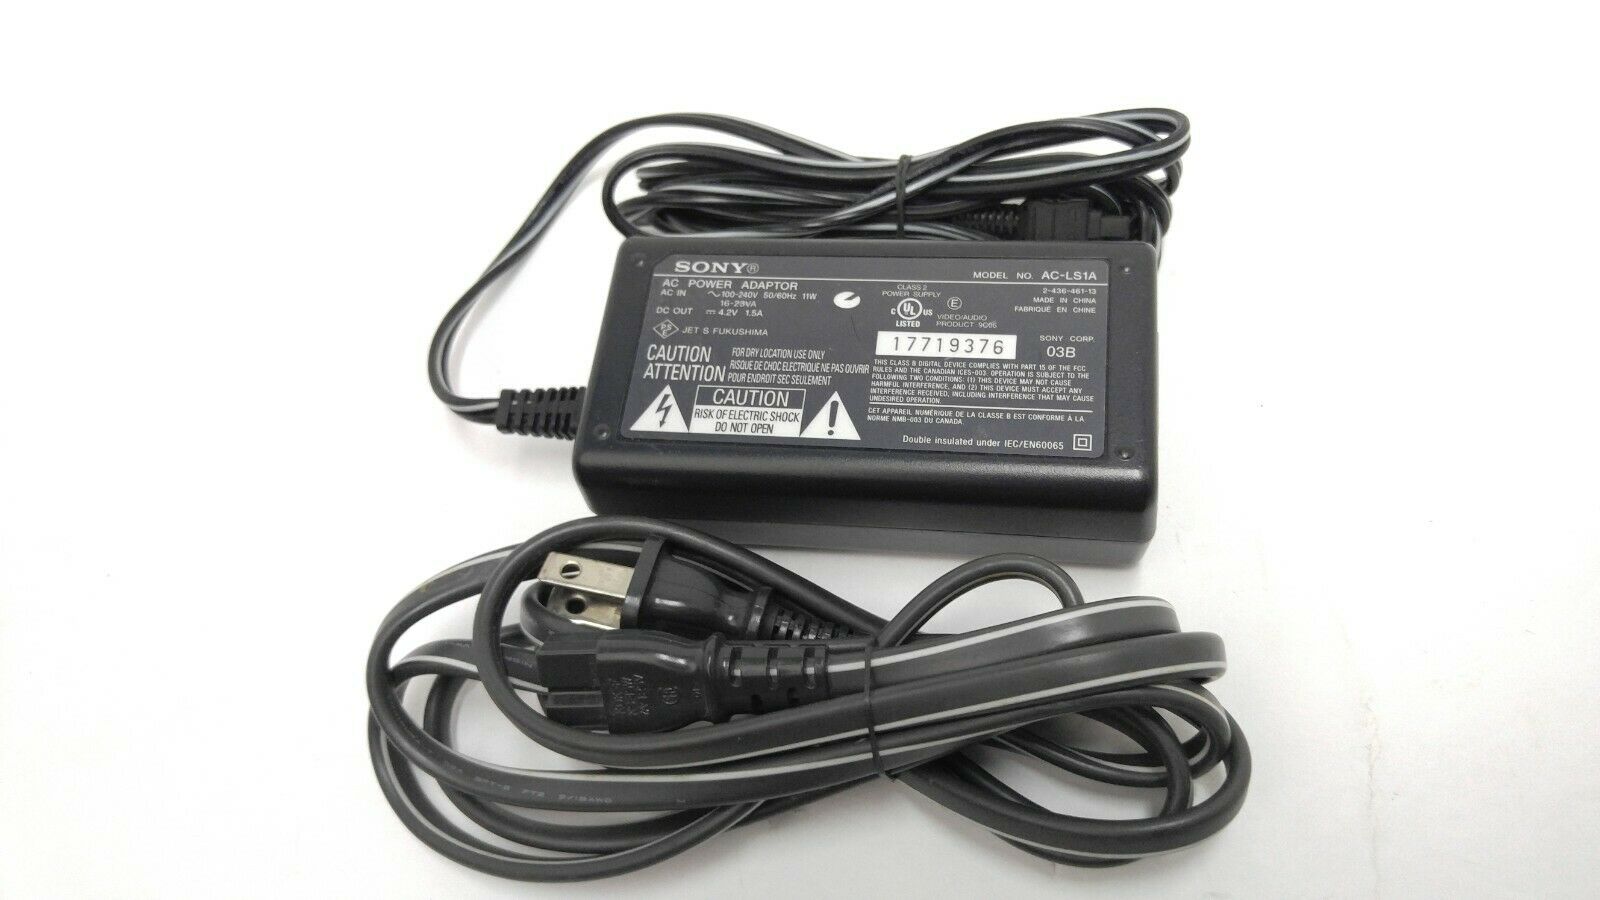 AC-LS1A Sony AC Adapter for Cybershot DSC-P5